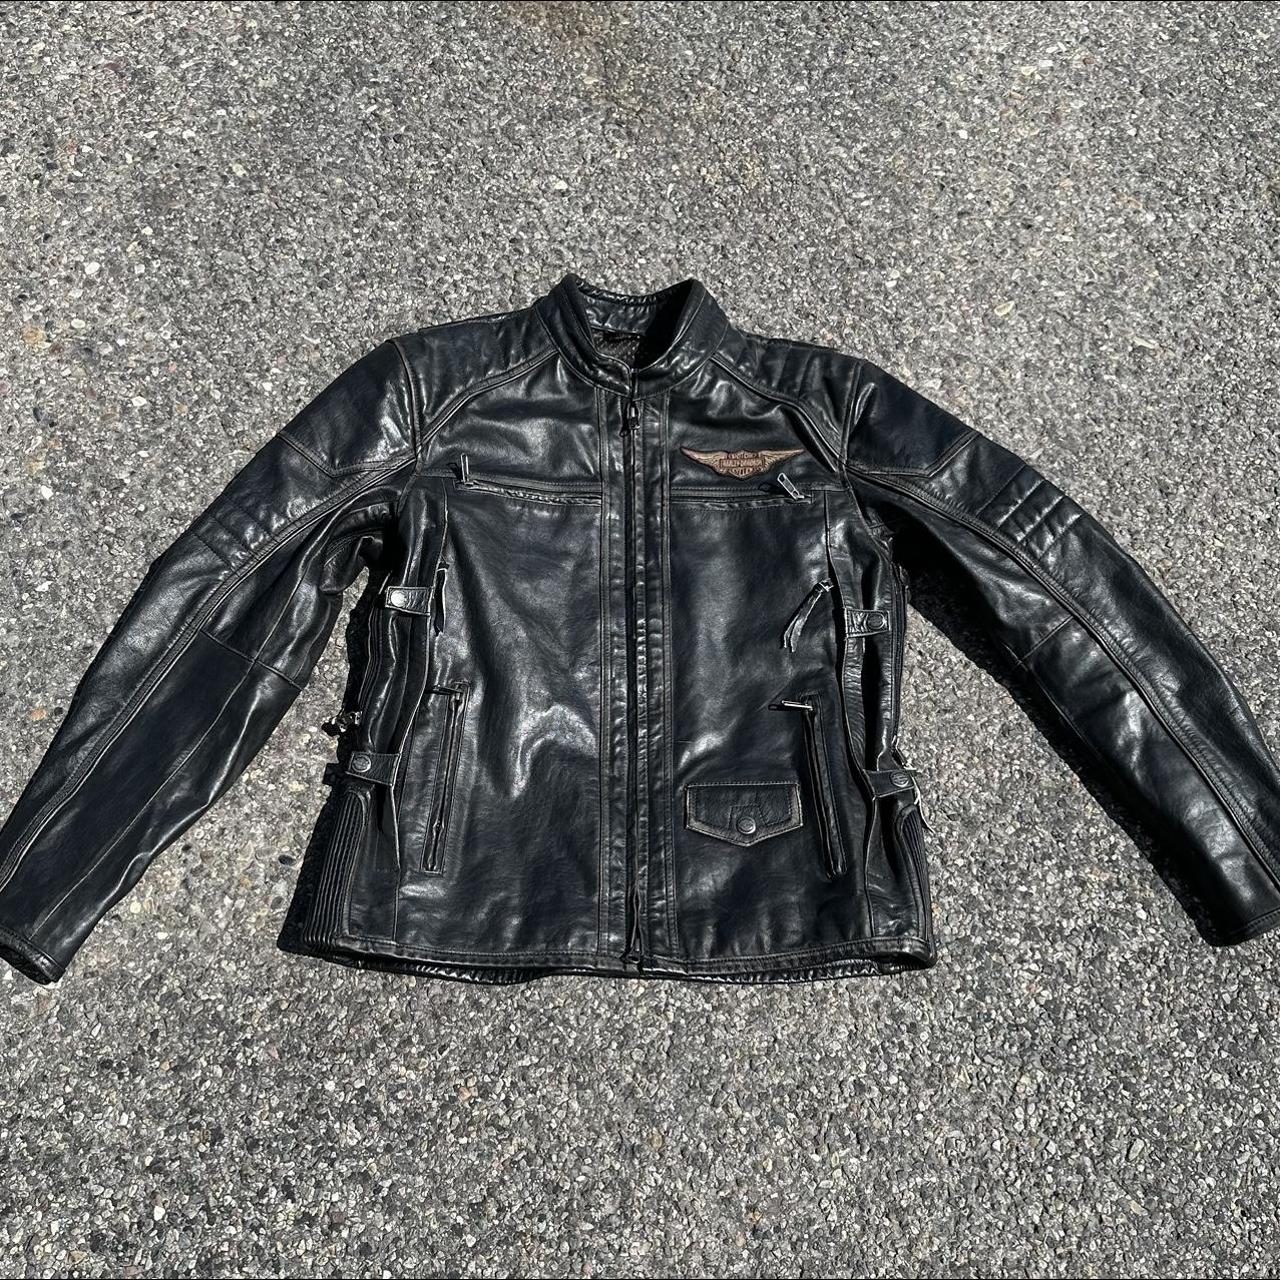 Harley Davidson Leather riding jacket size large. No... - Depop